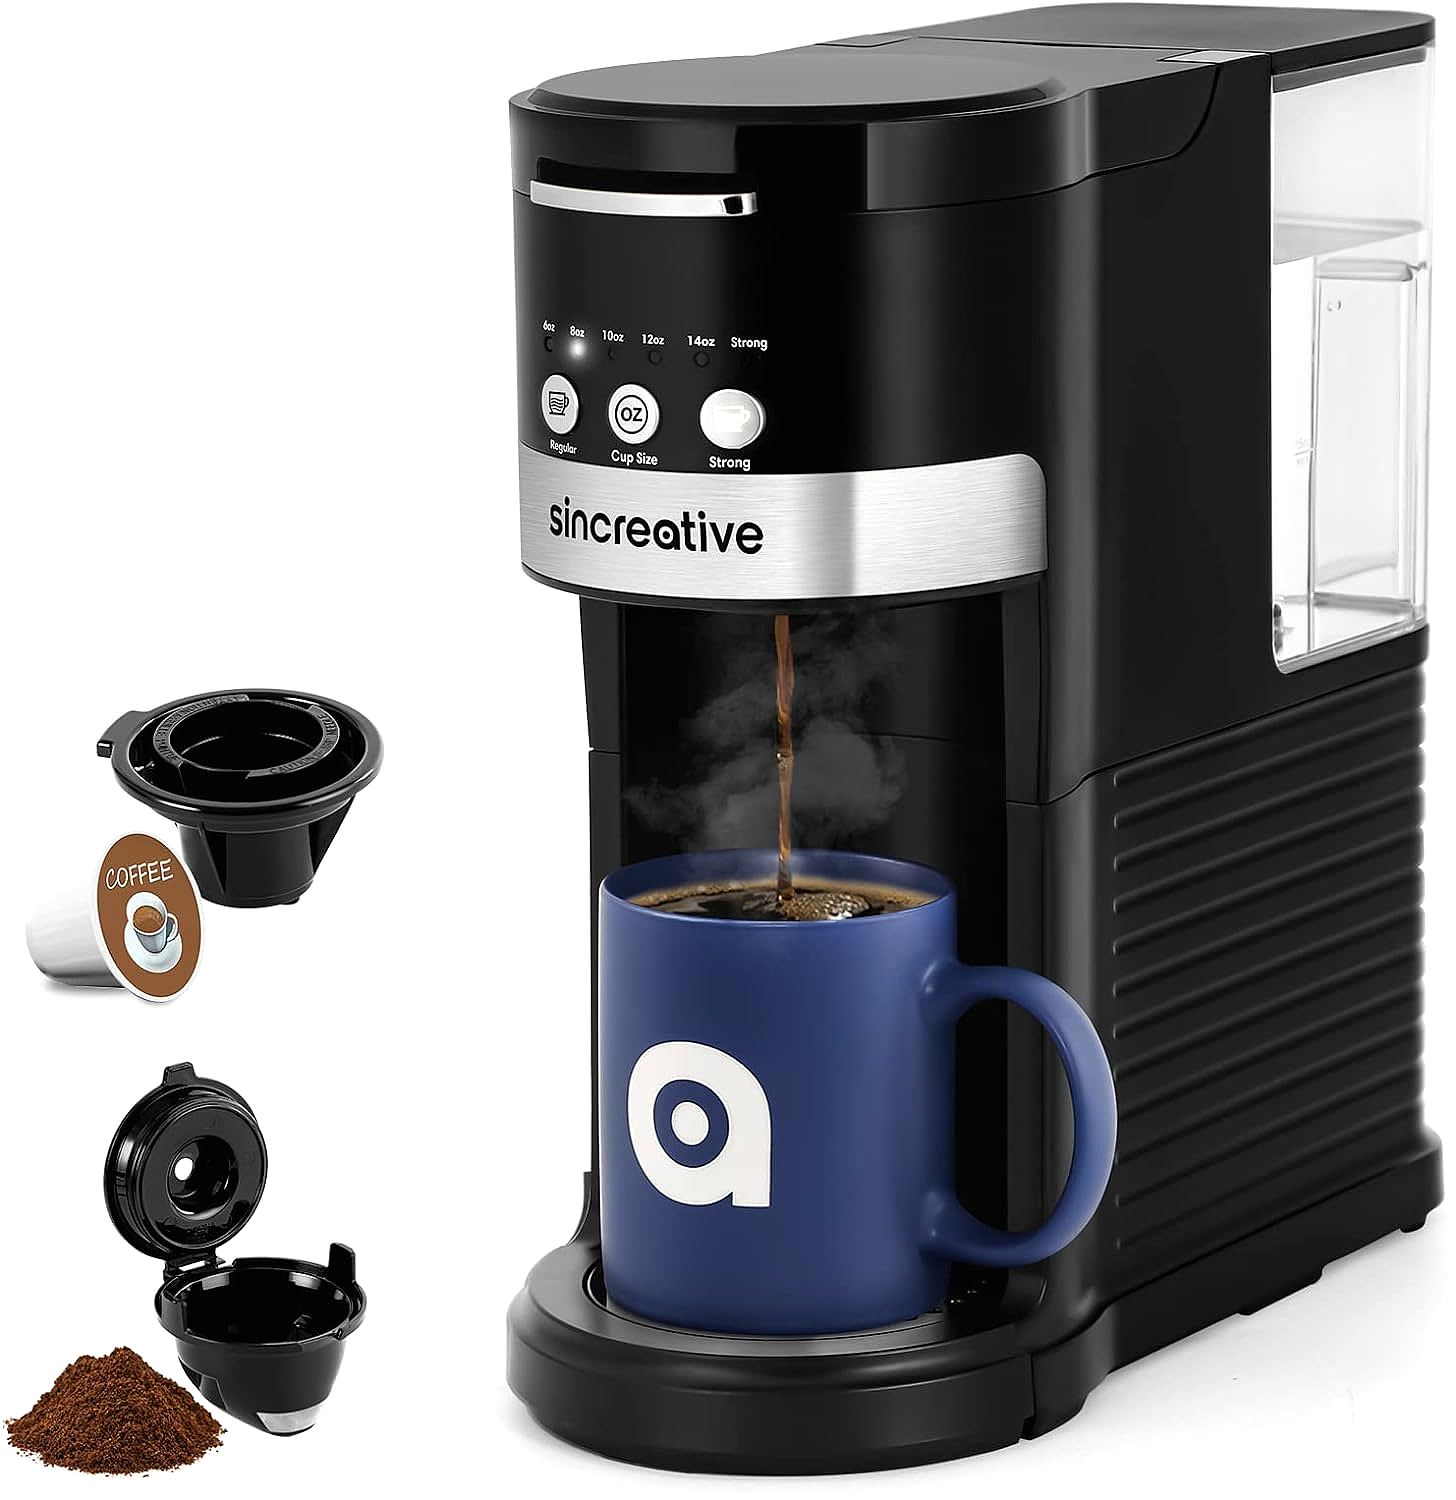 Sincreative CM9429 Single Serve Coffee Maker: A Convenient and Versatile Coffee Solution